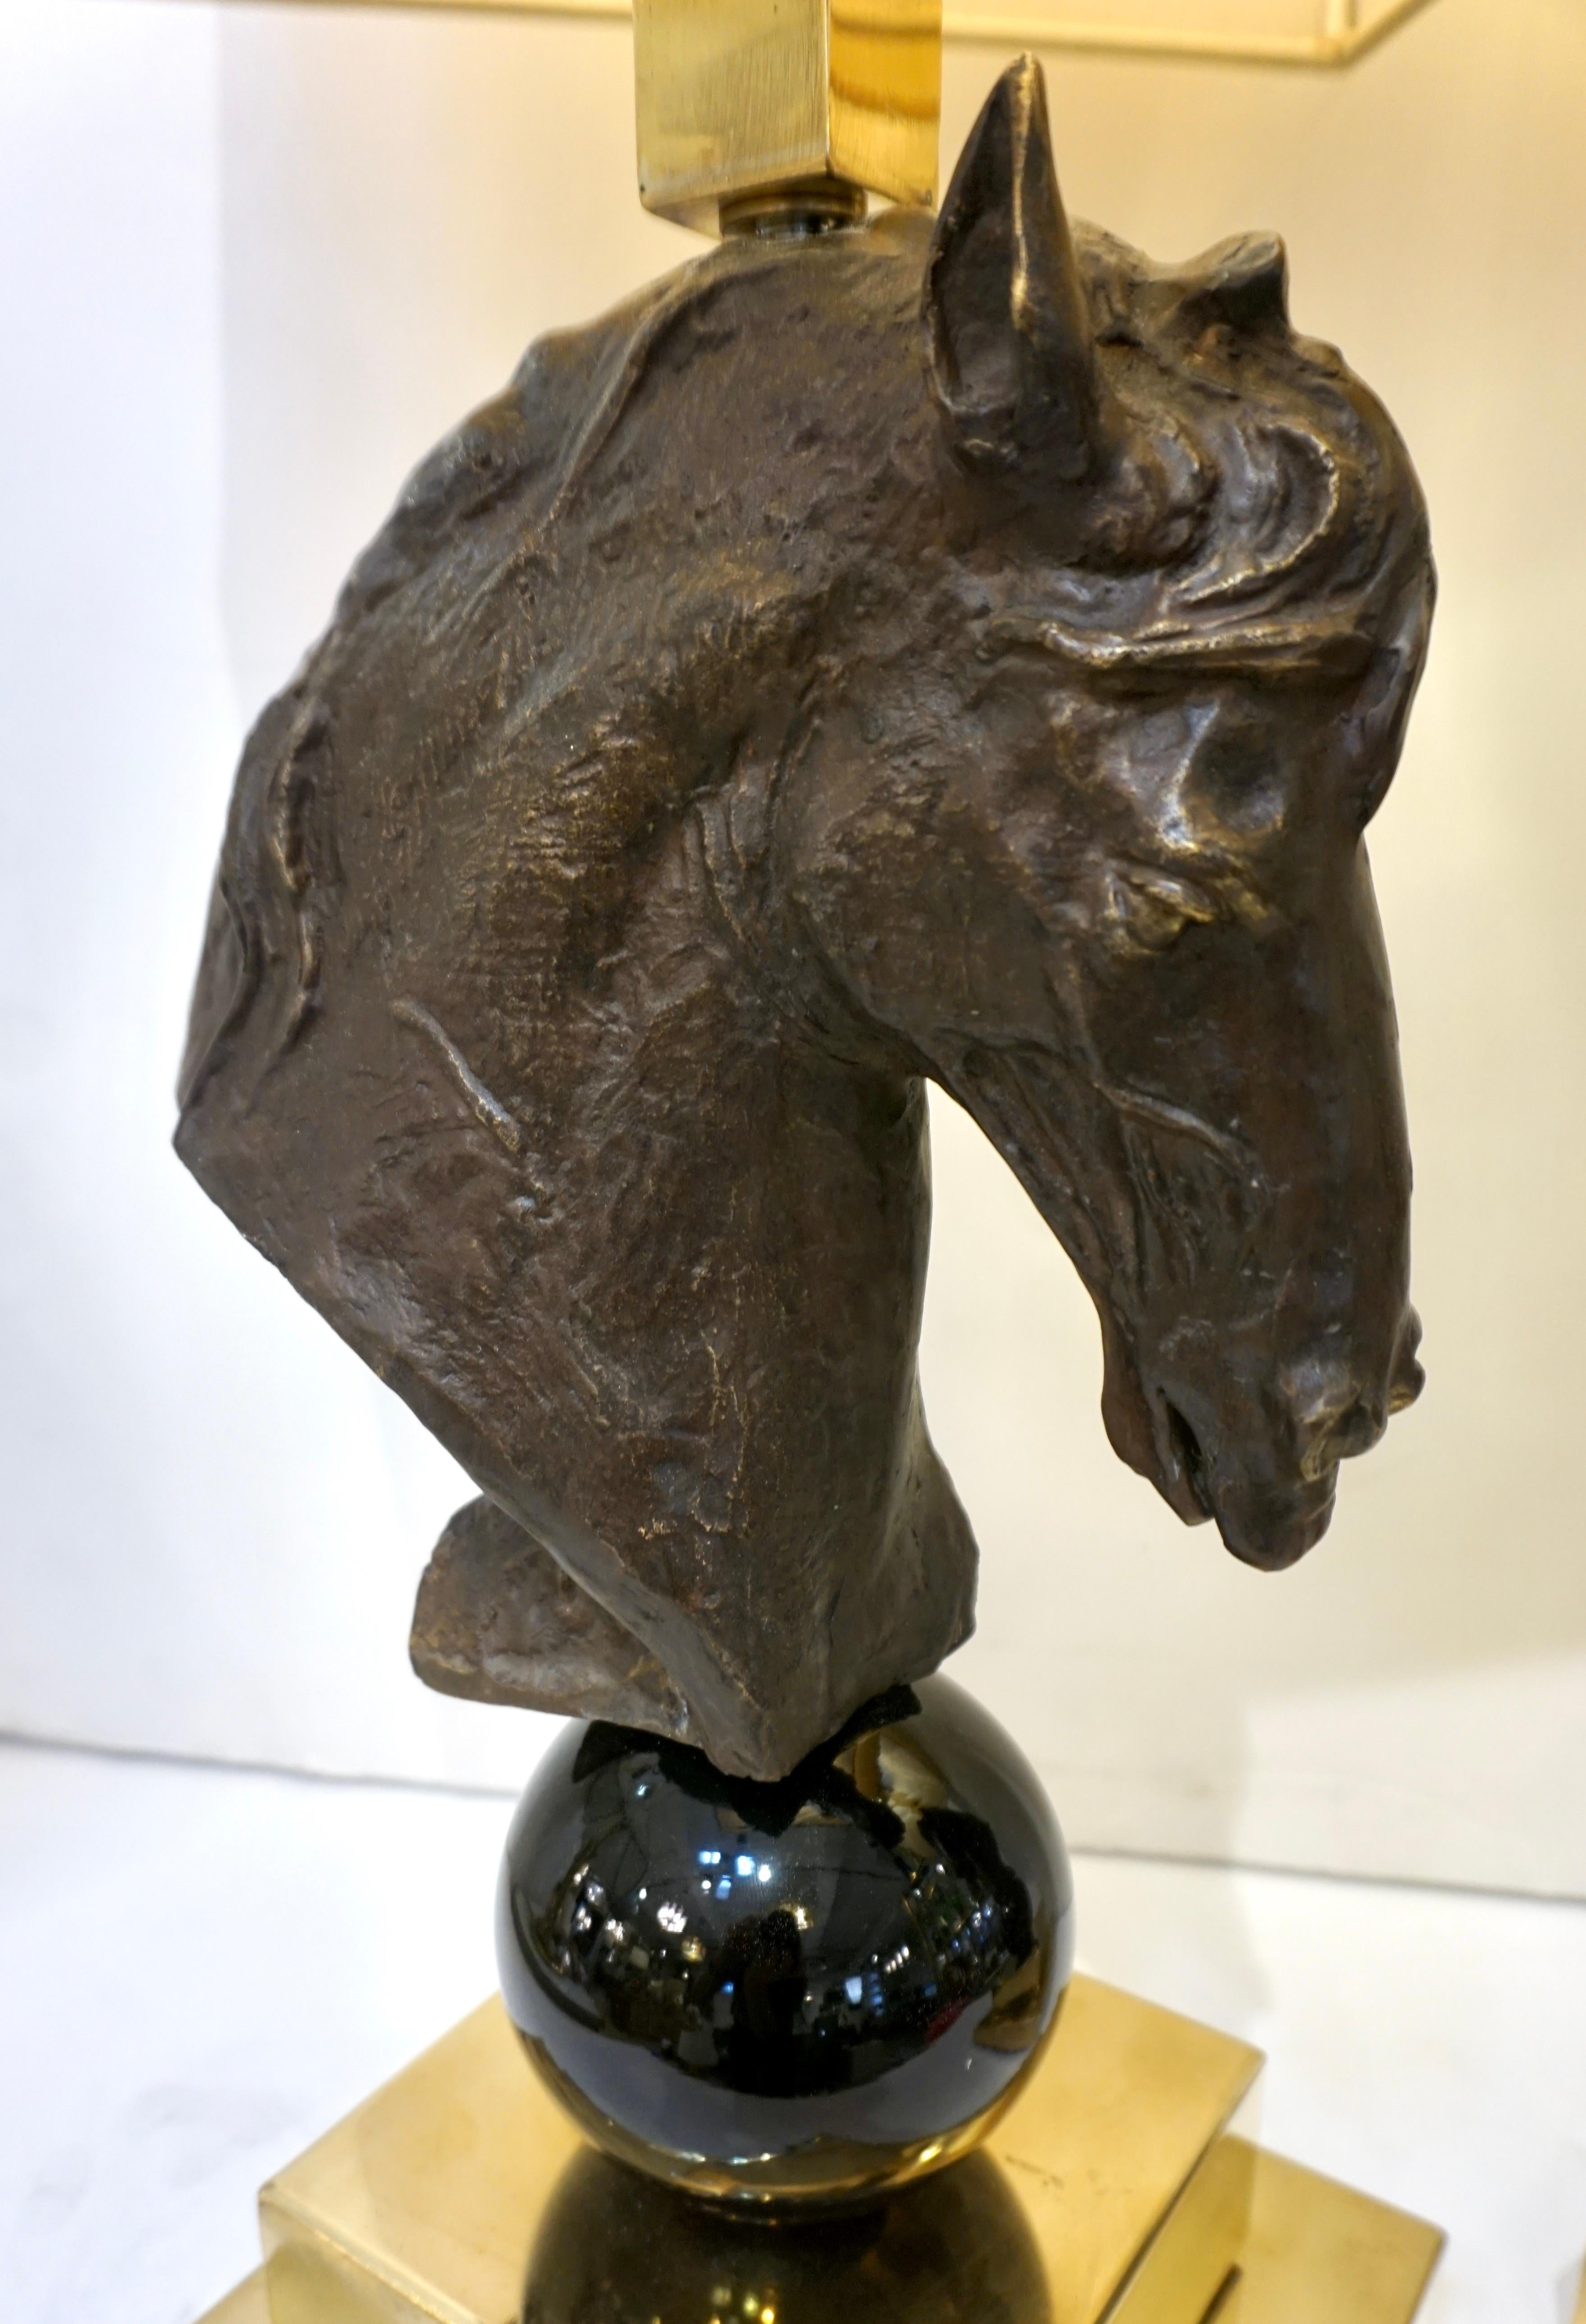 Italian Design 1990s Horse Bronze Sculpture Black Glass Pair of Brass Lamps For Sale 2